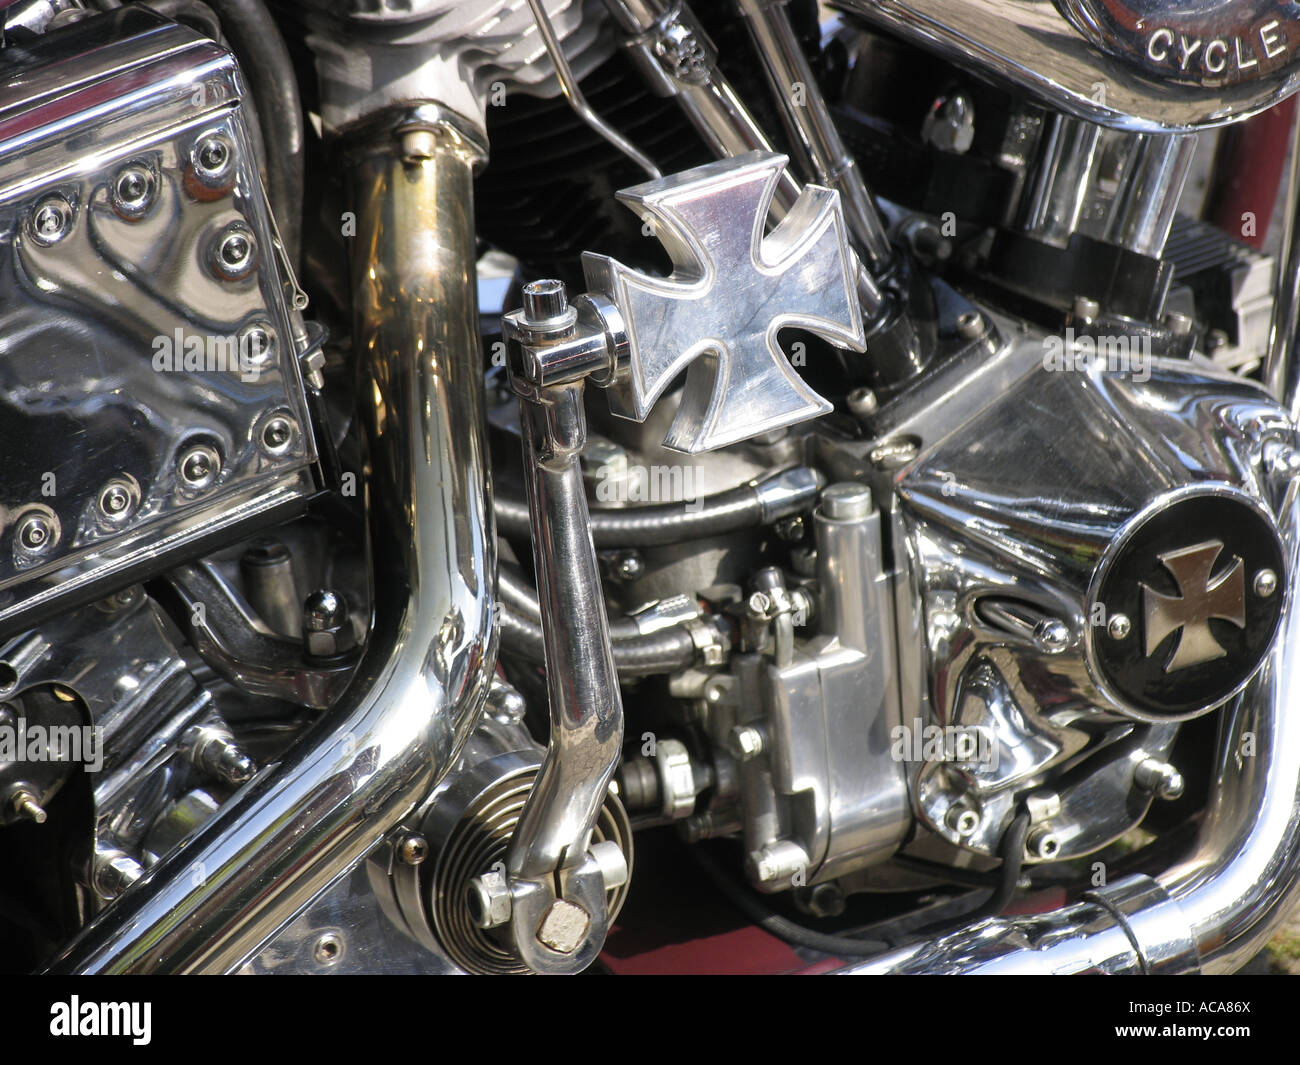 Harley Davidson Shovelhead Stock Photo